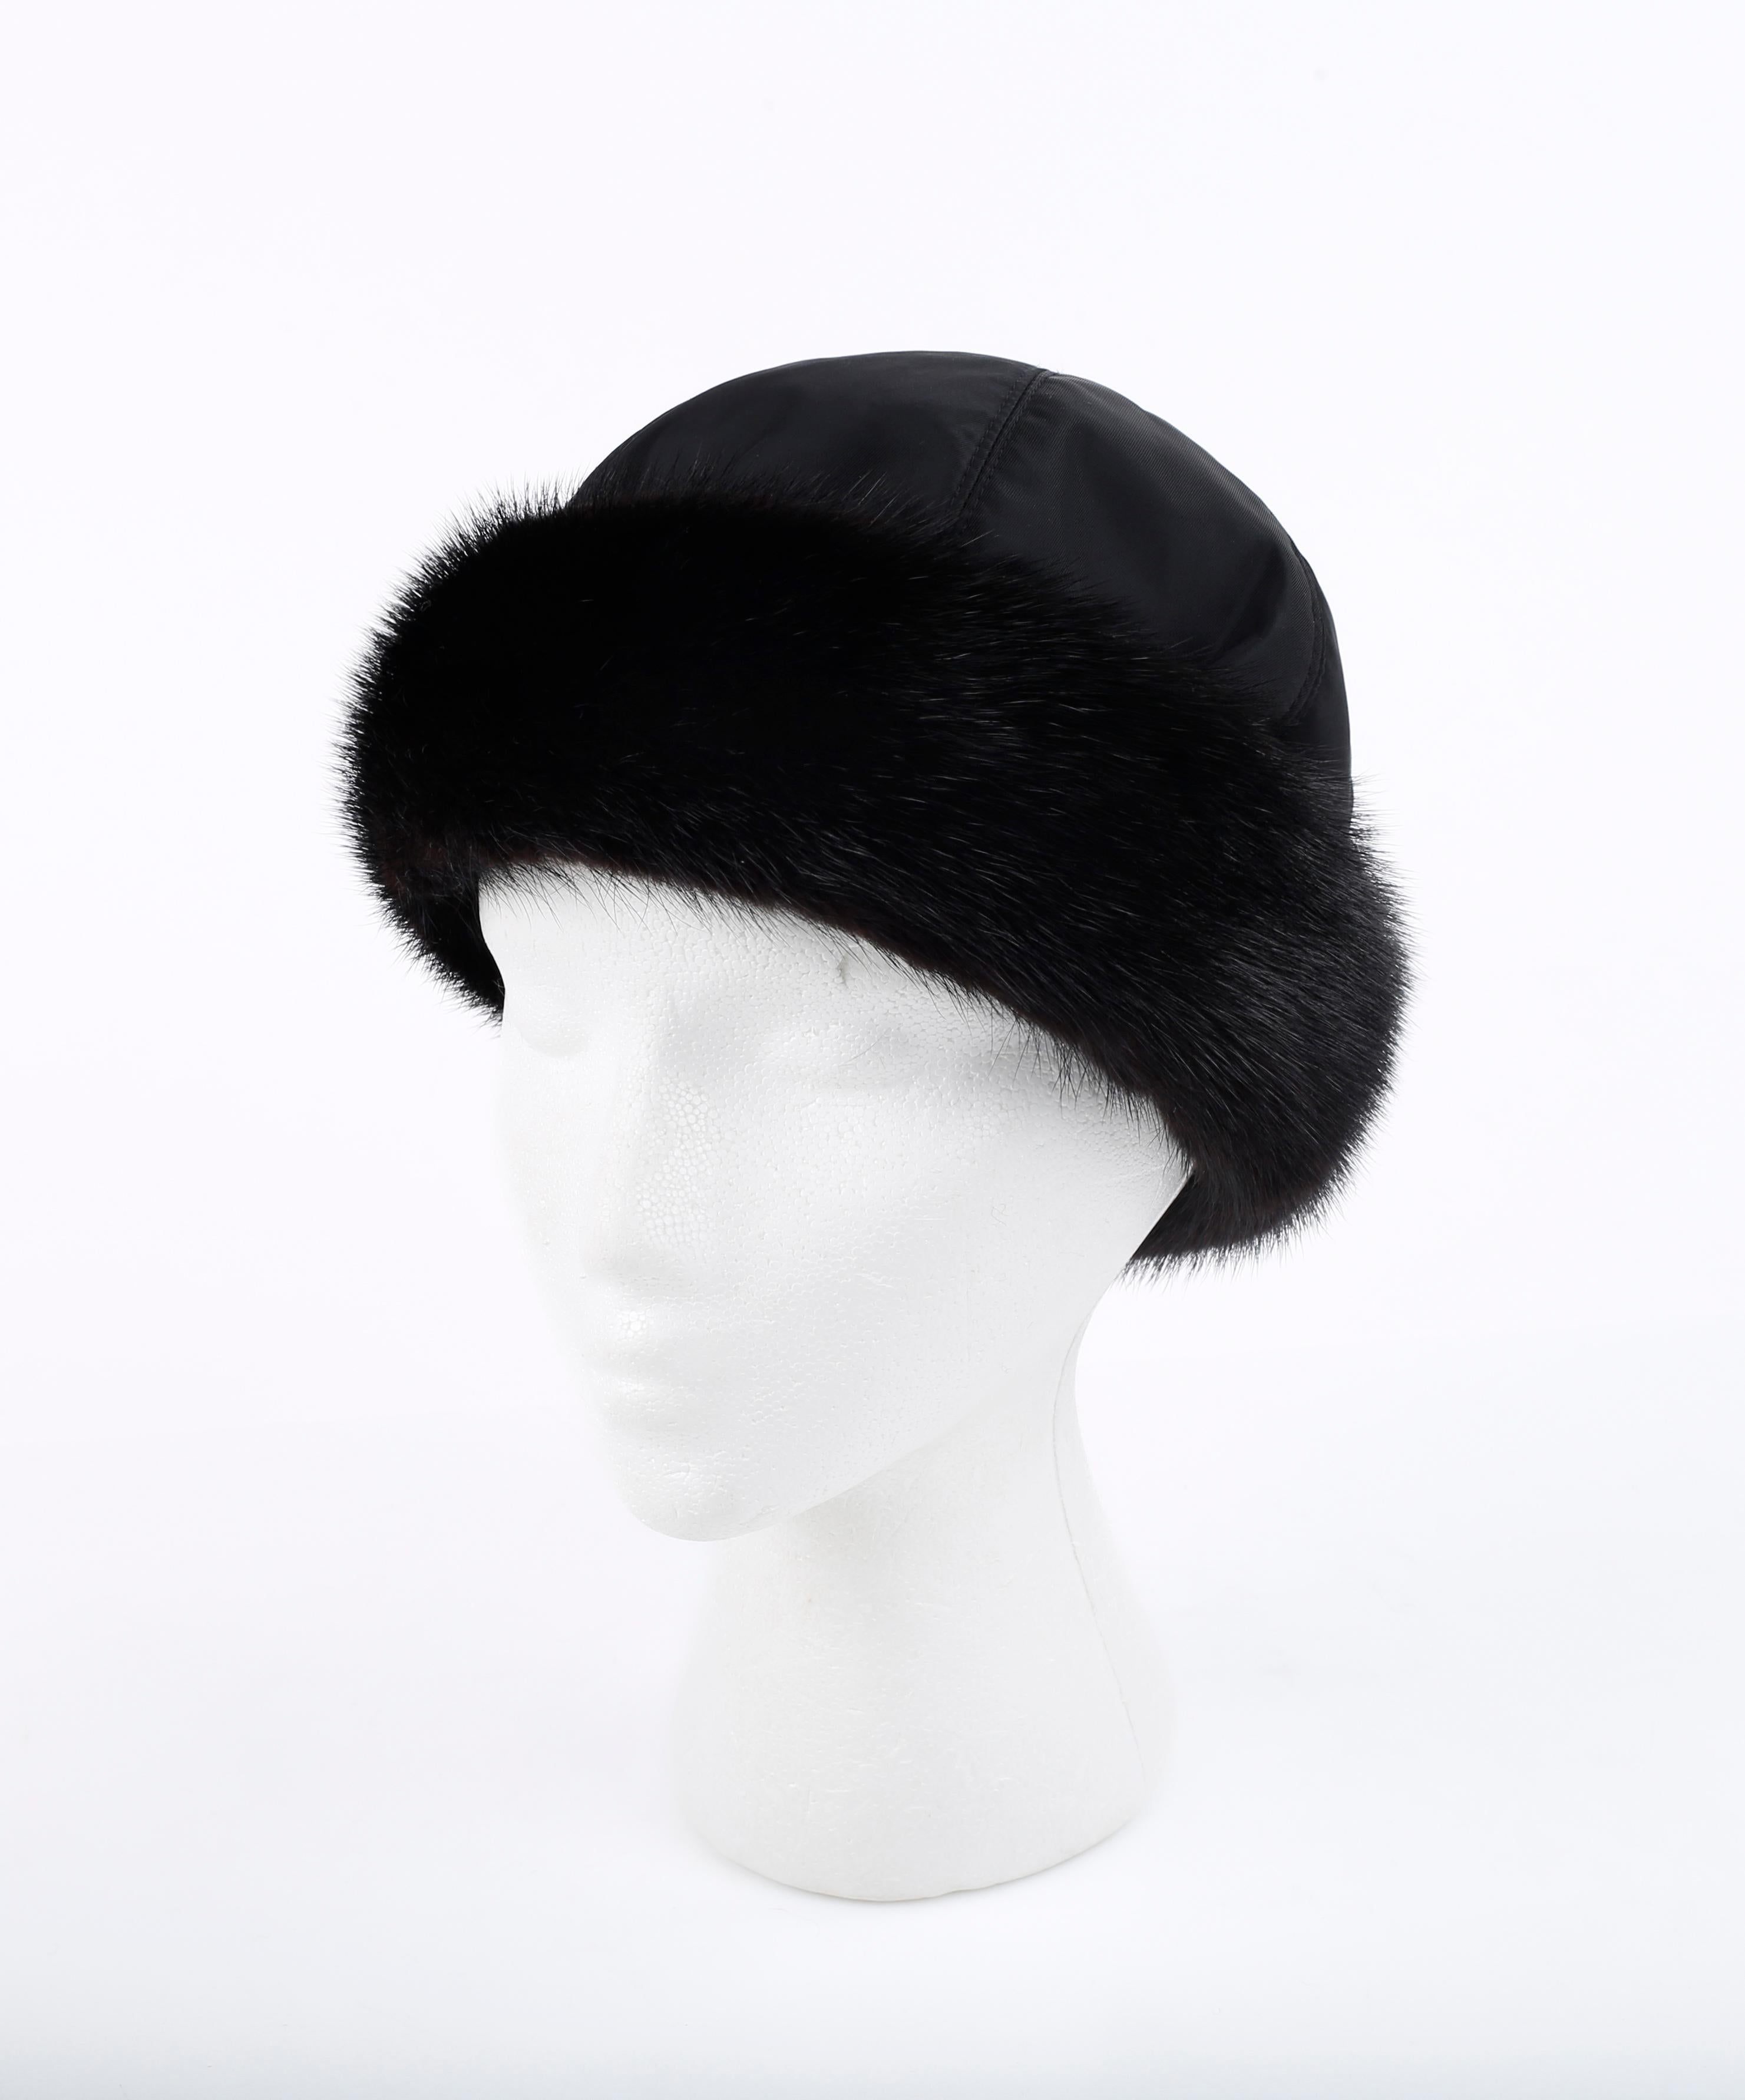 PRADA c. 1990's Black Mink Fur Nylon Winter Hat Cap

Brand / Manufacturer: Prada
Circa: 1990's
Designer: Miuccia Prada
Style: Winter Cap
Color(s): Black
Lined: Yes
Marked Fabric: 